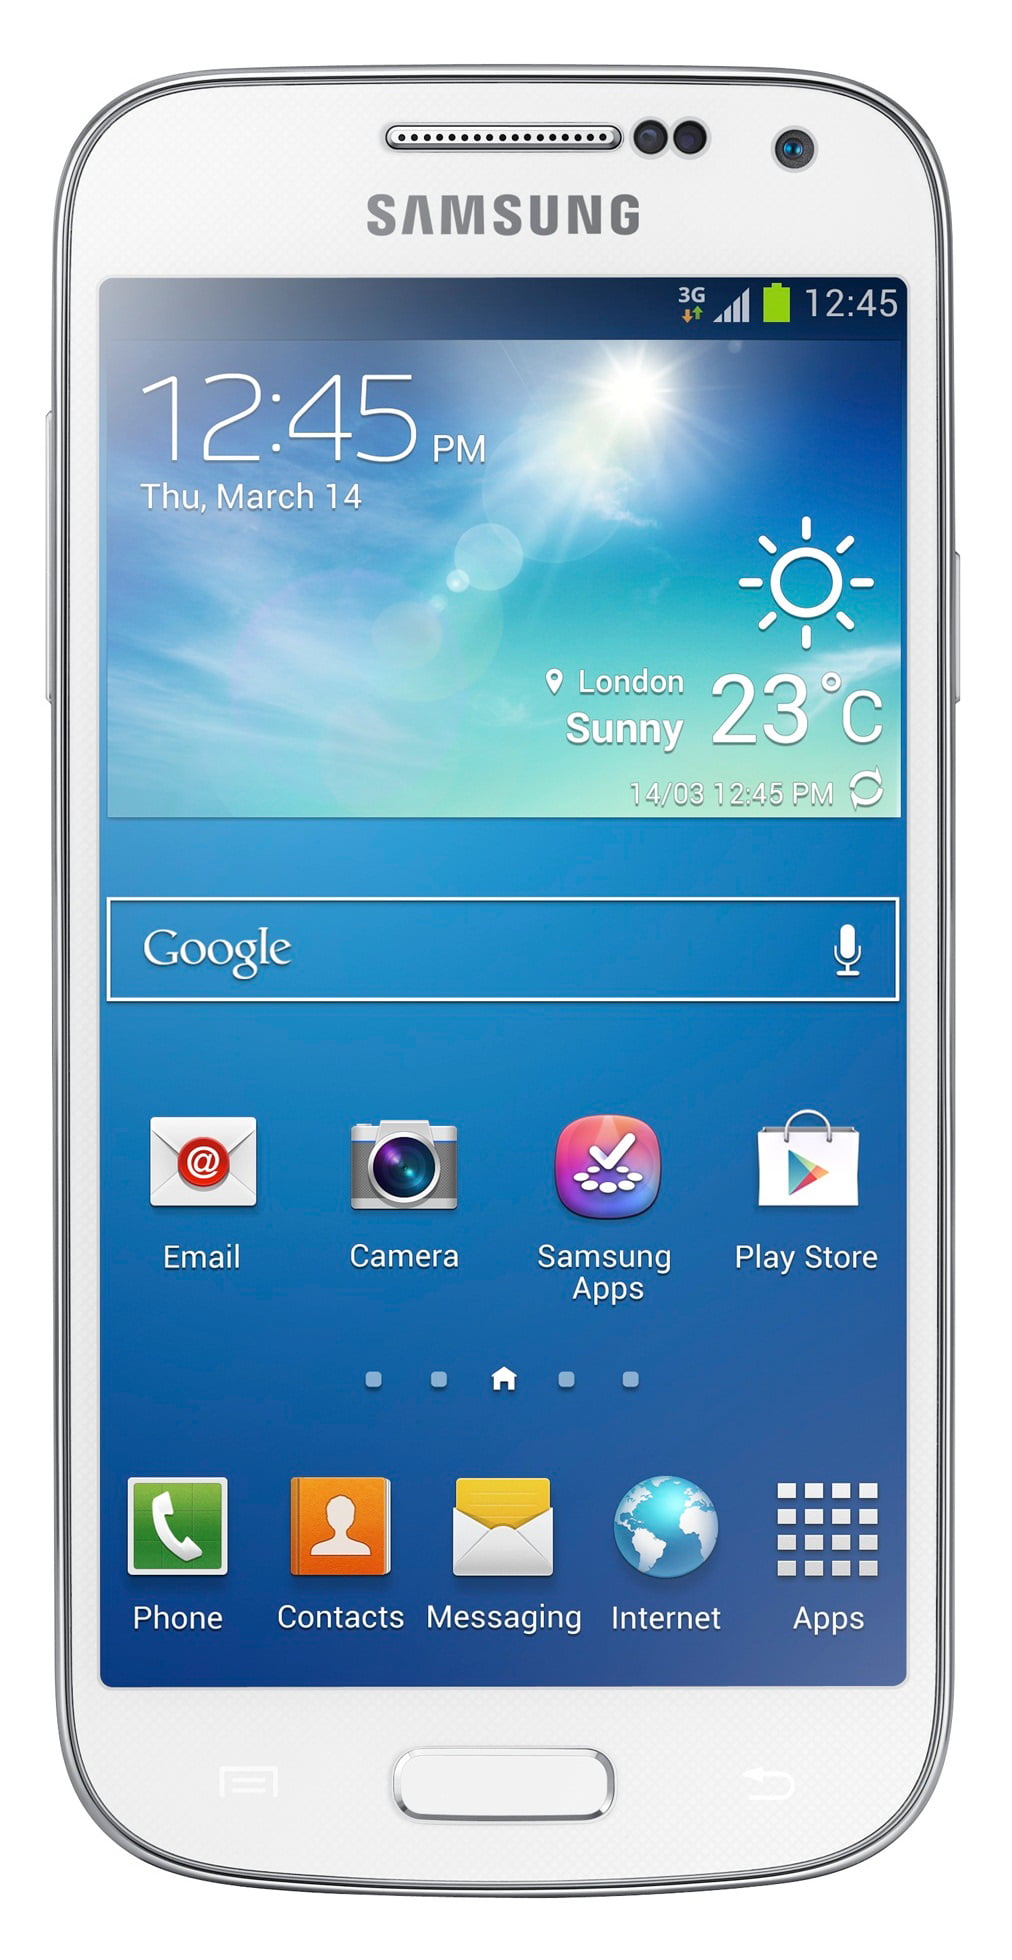 Samsung Galaxy S4 Mini I257 16gb Atandt 4g Lte Dual Core Android Phone W